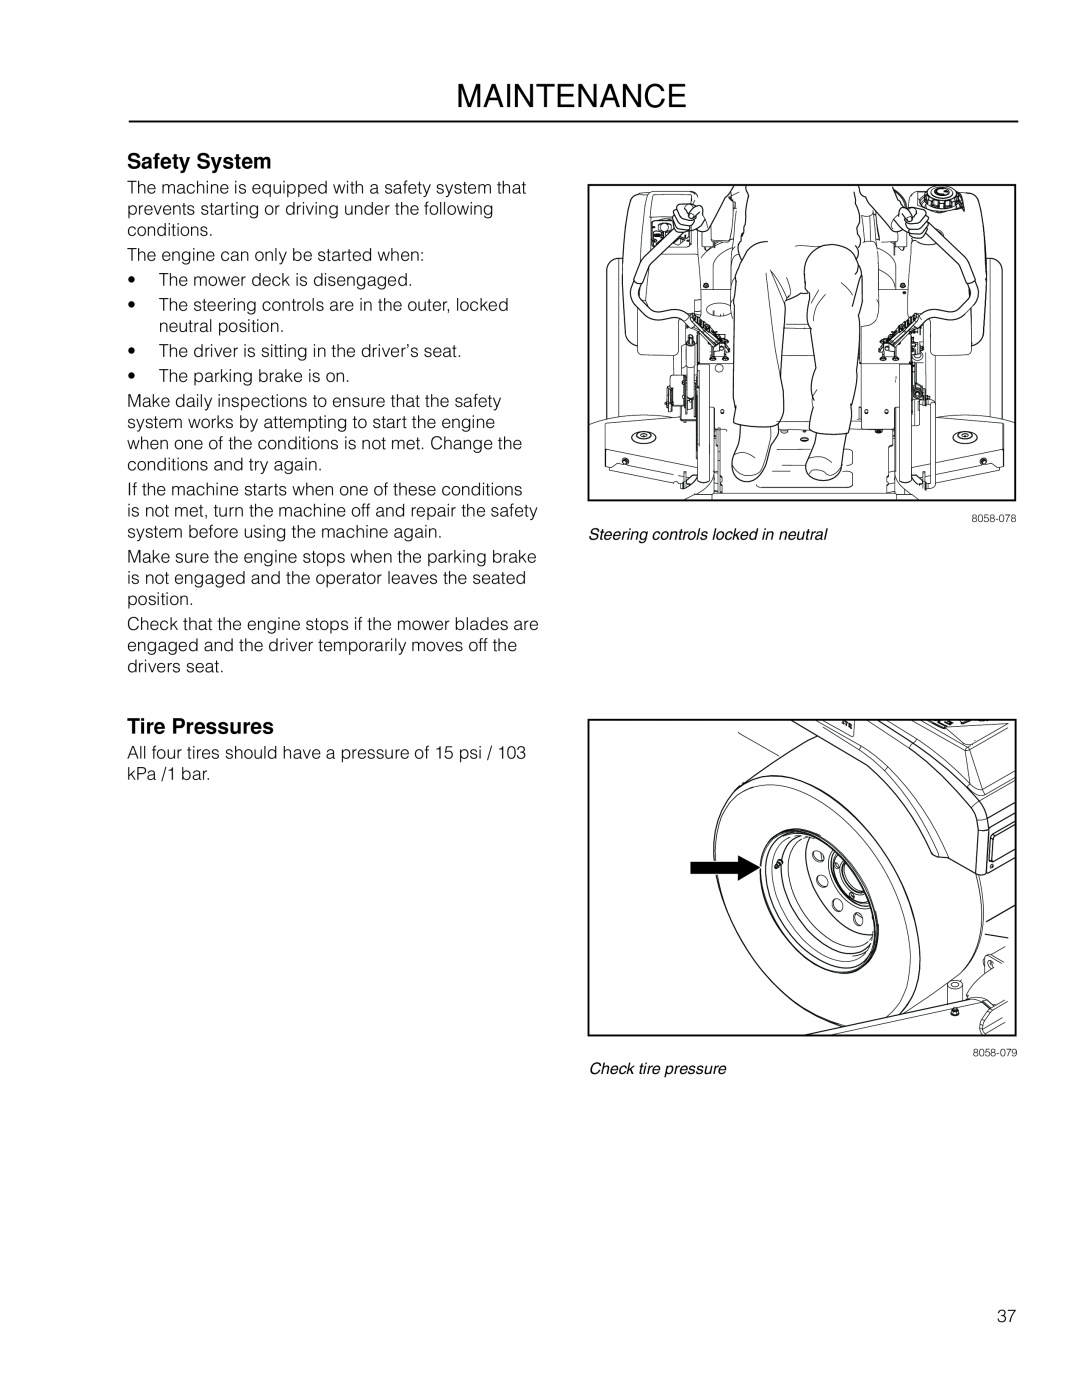 Dixon 966503601, SZ4619 CA manual Safety System, Tire Pressures, Maintenance 